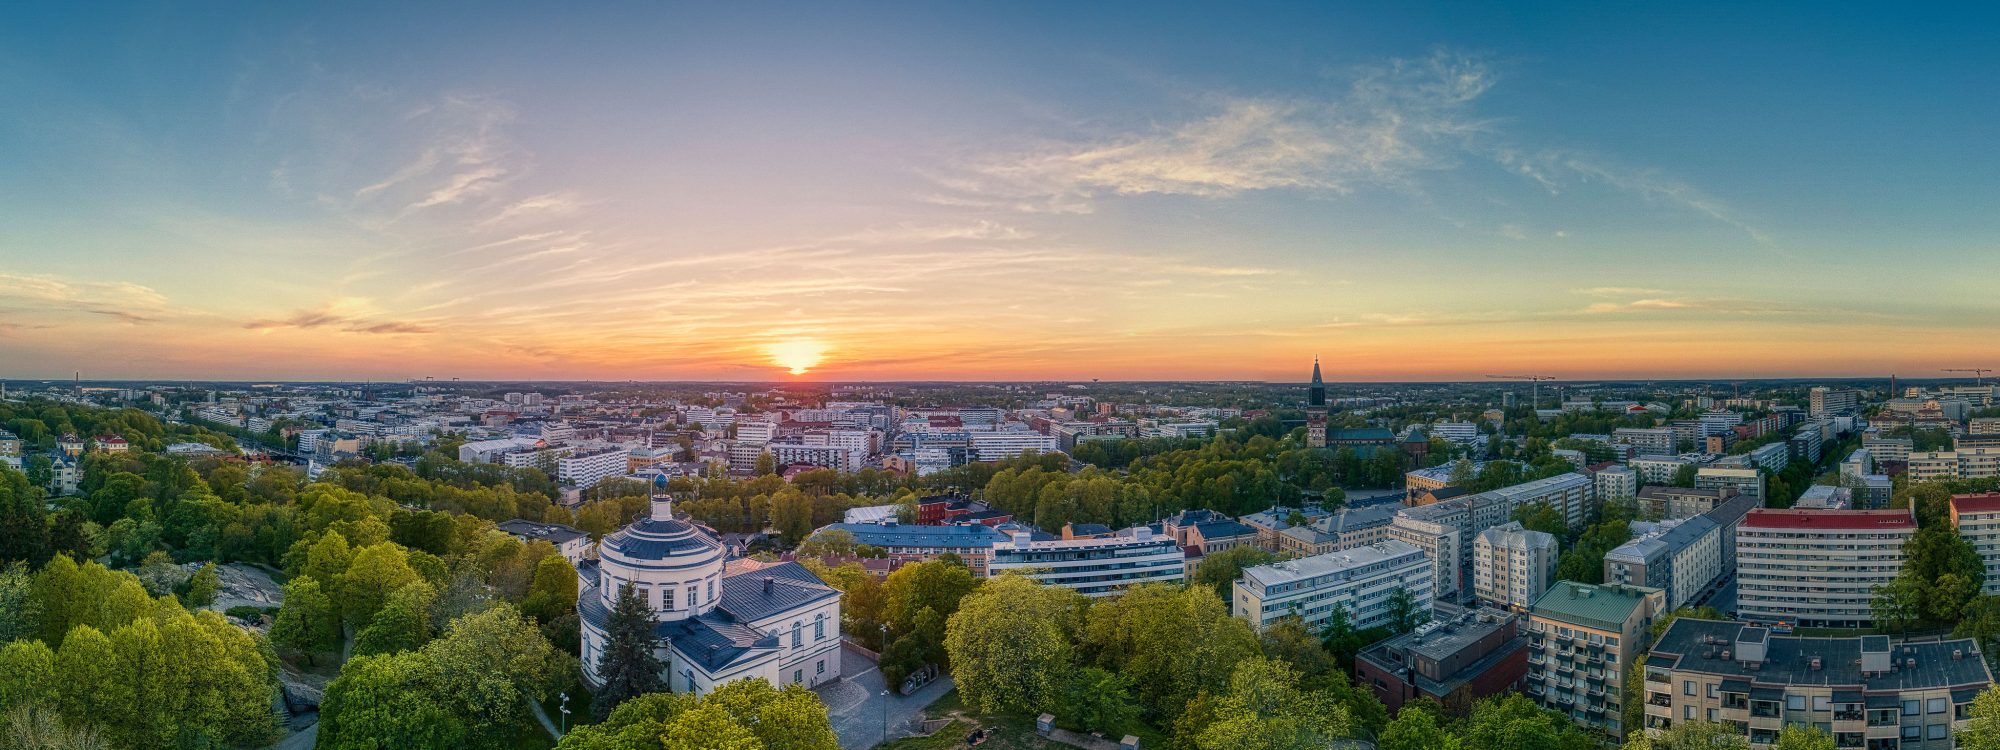 A panorama shot of the city of Turku